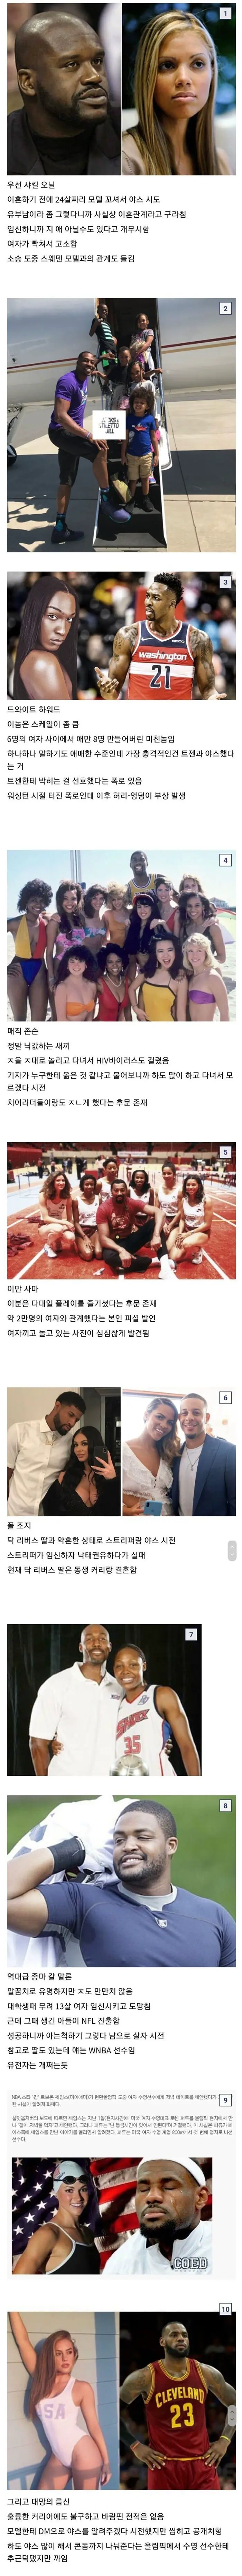 NBA 선수들의 여성 편력. | mbong.kr 엠봉